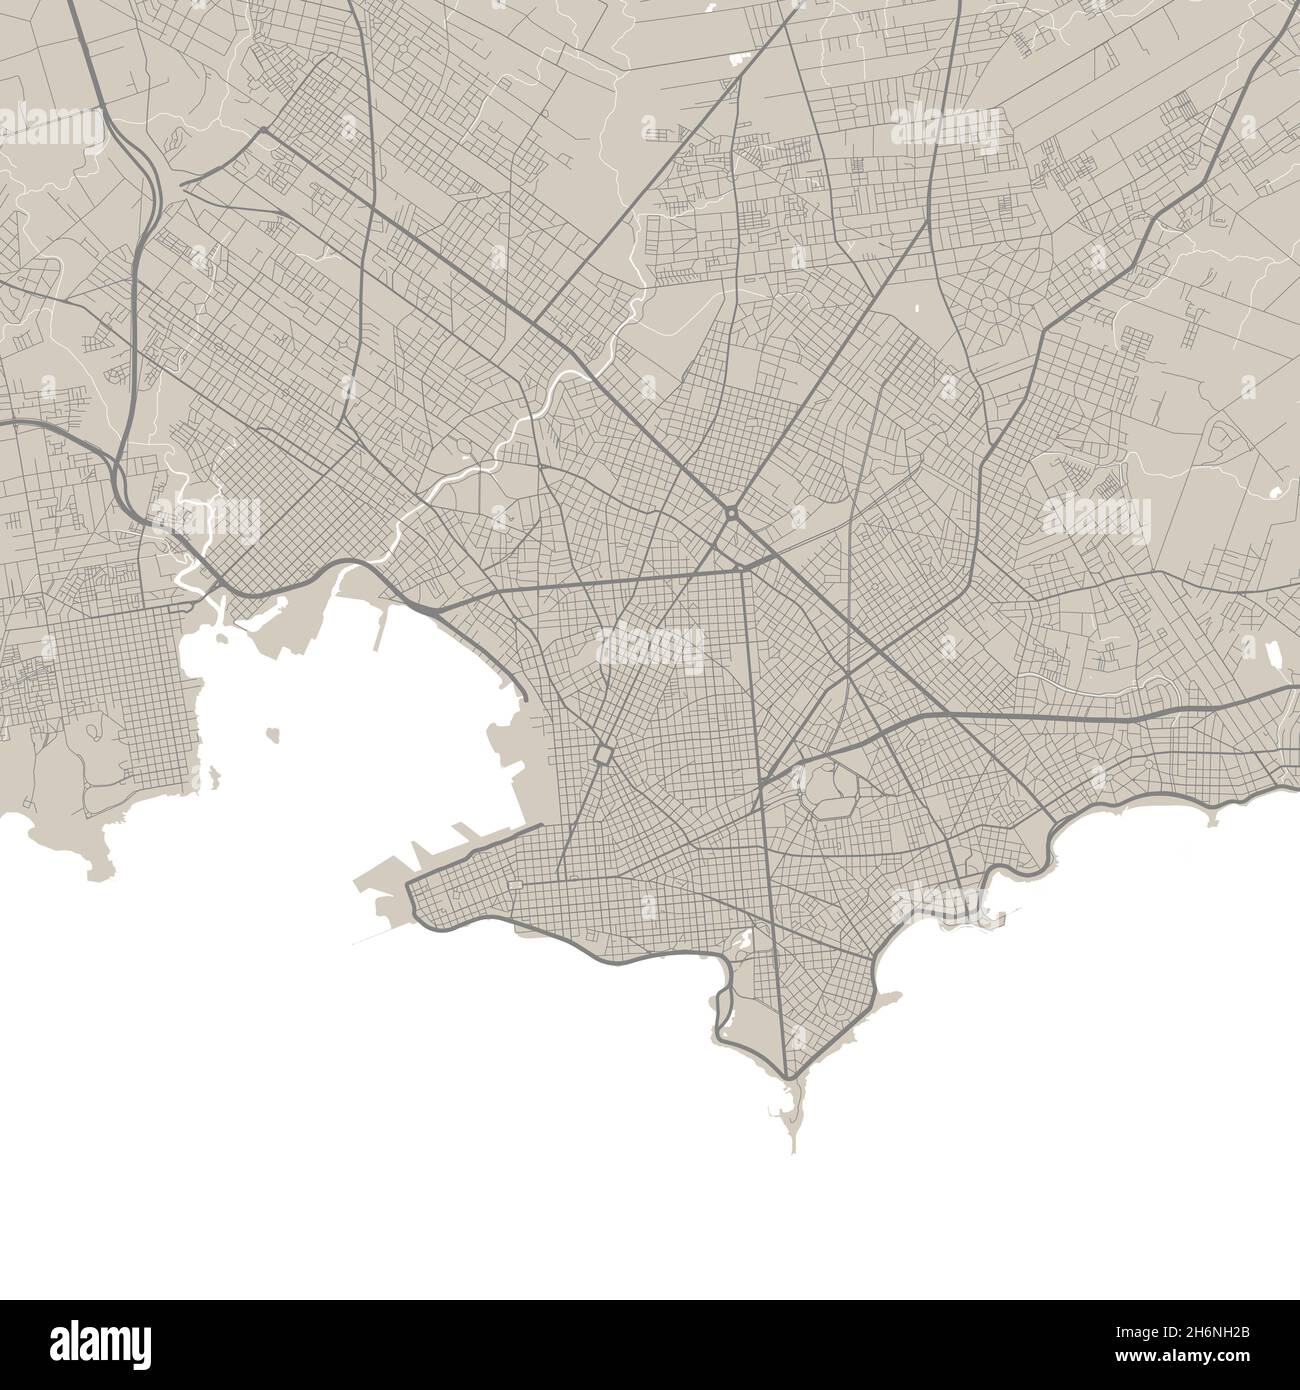 Vector map of Montevideo, Uruguay. Urban city in Uruguay. Street map poster illustration. Montevideo map art. Stock Vector